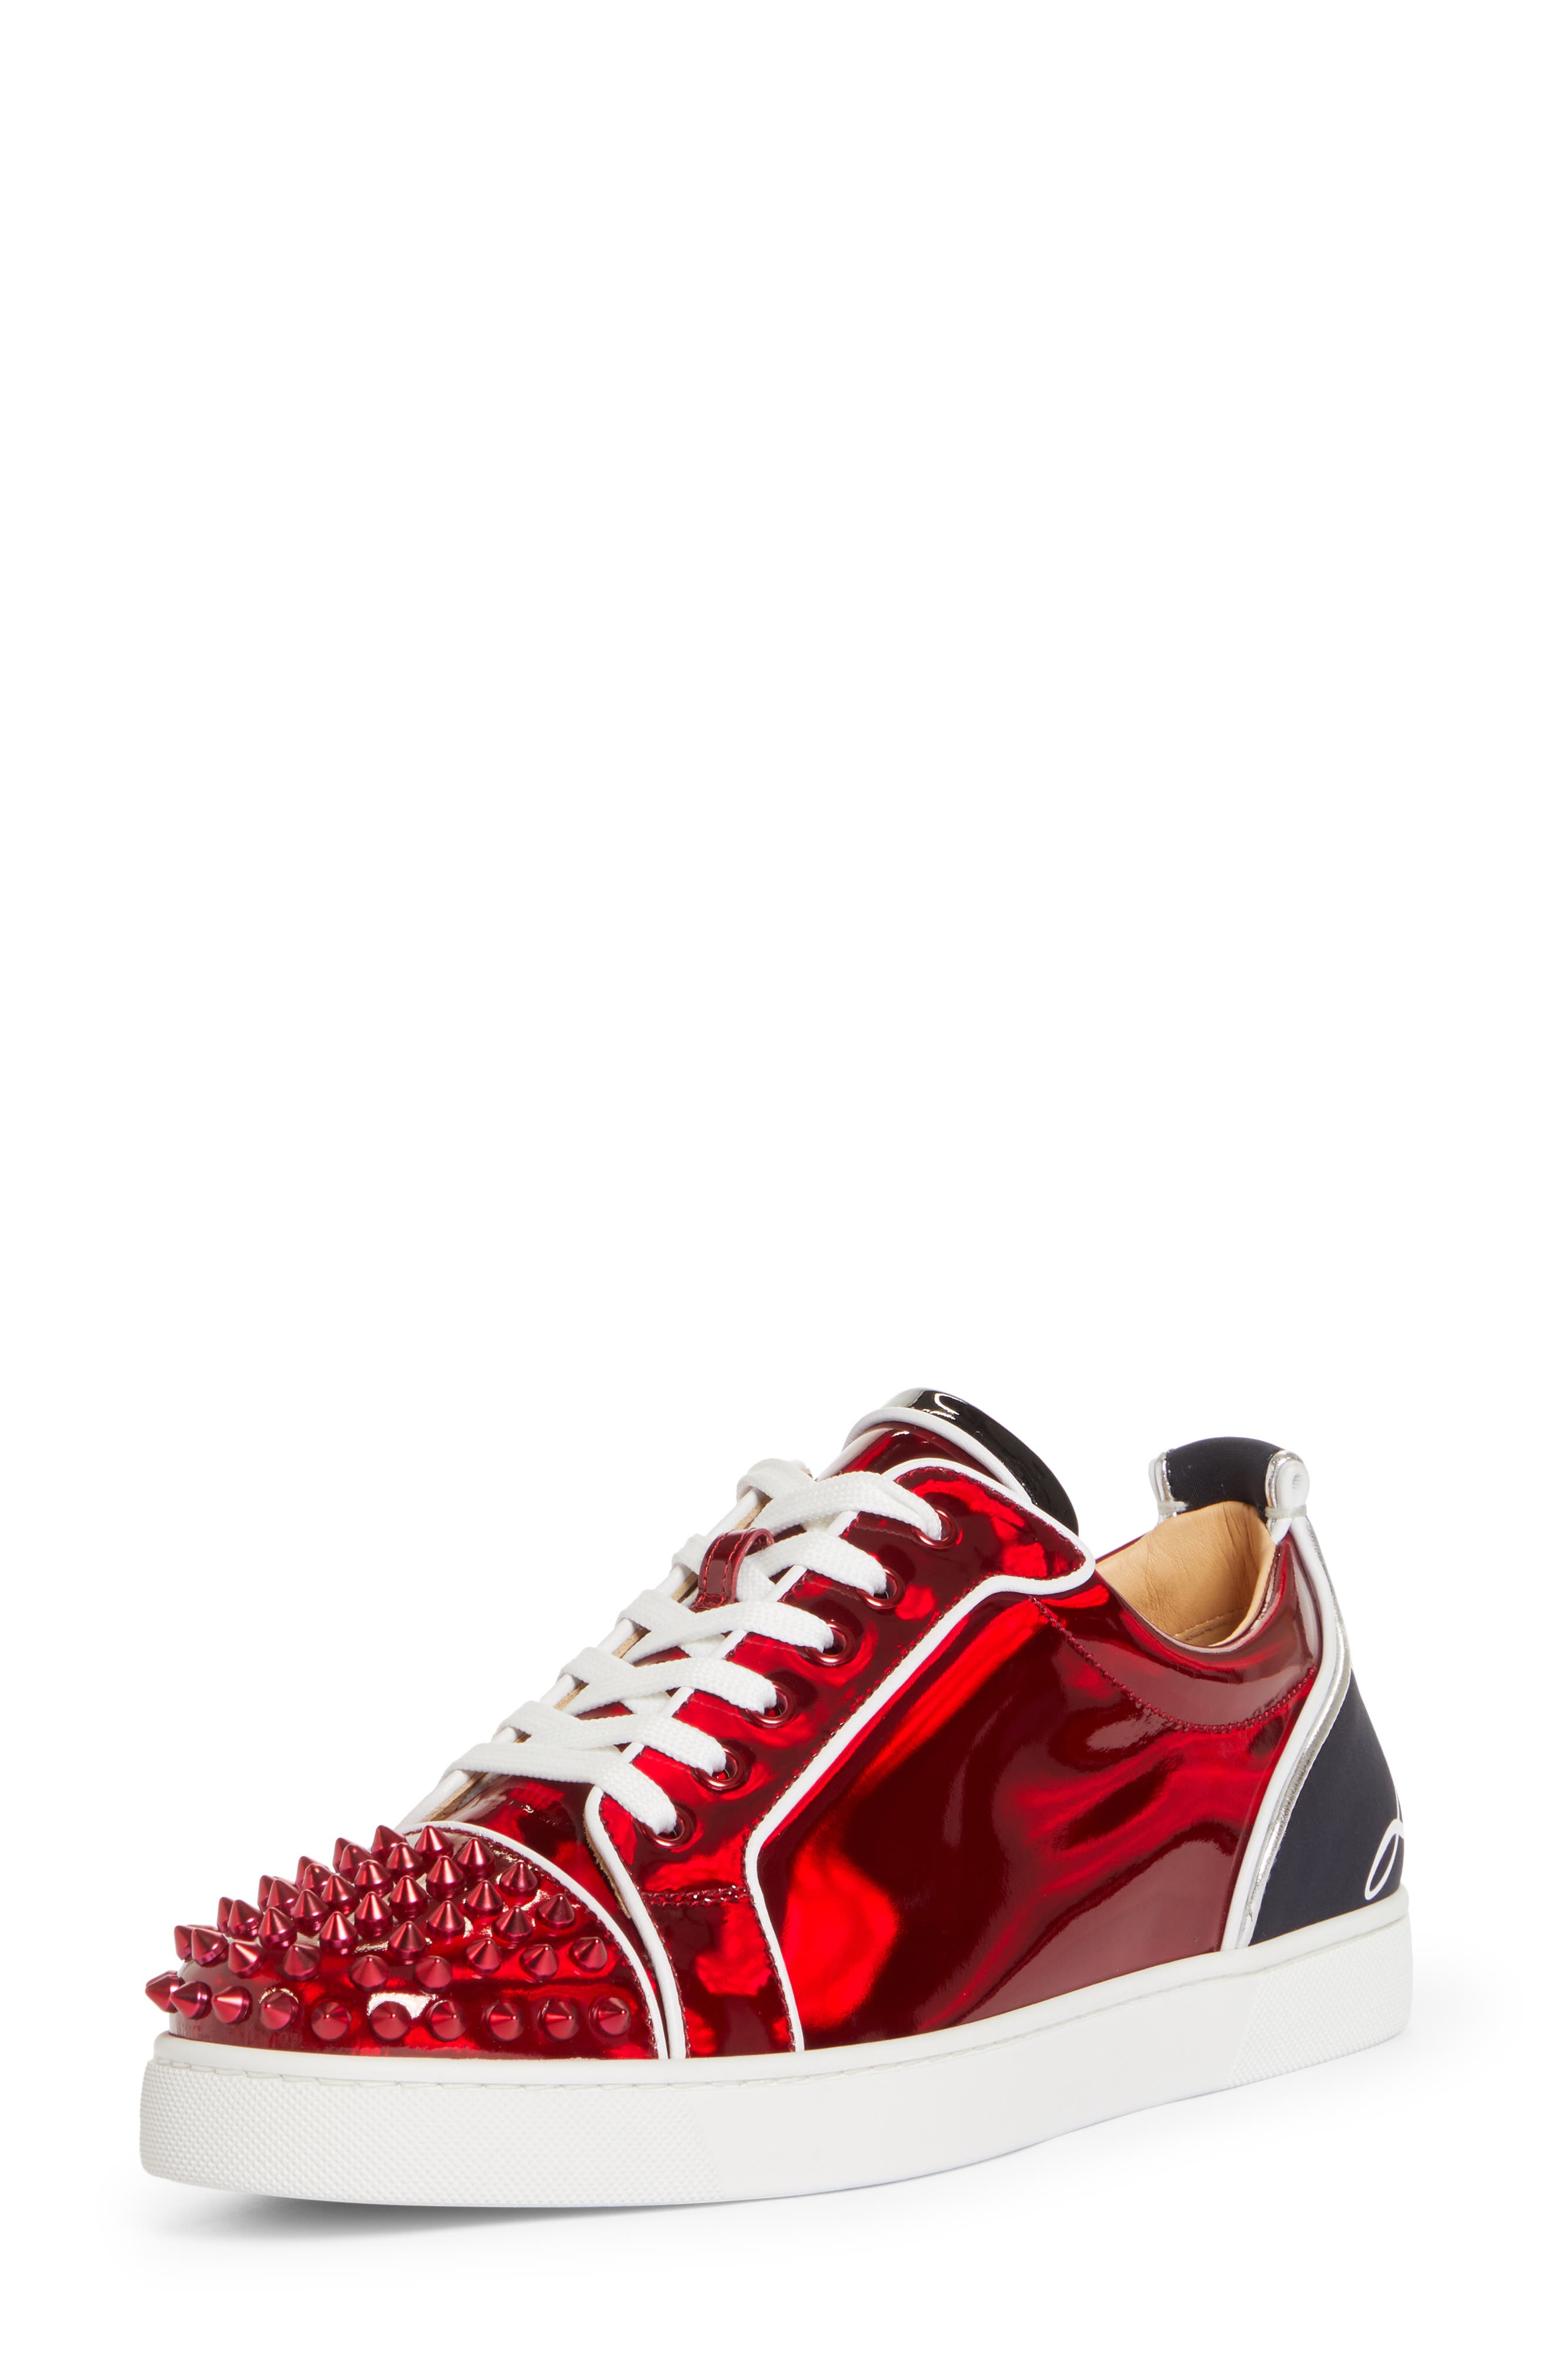 Christian Louboutin Fun Louis Junior Sneakers - Red - 44